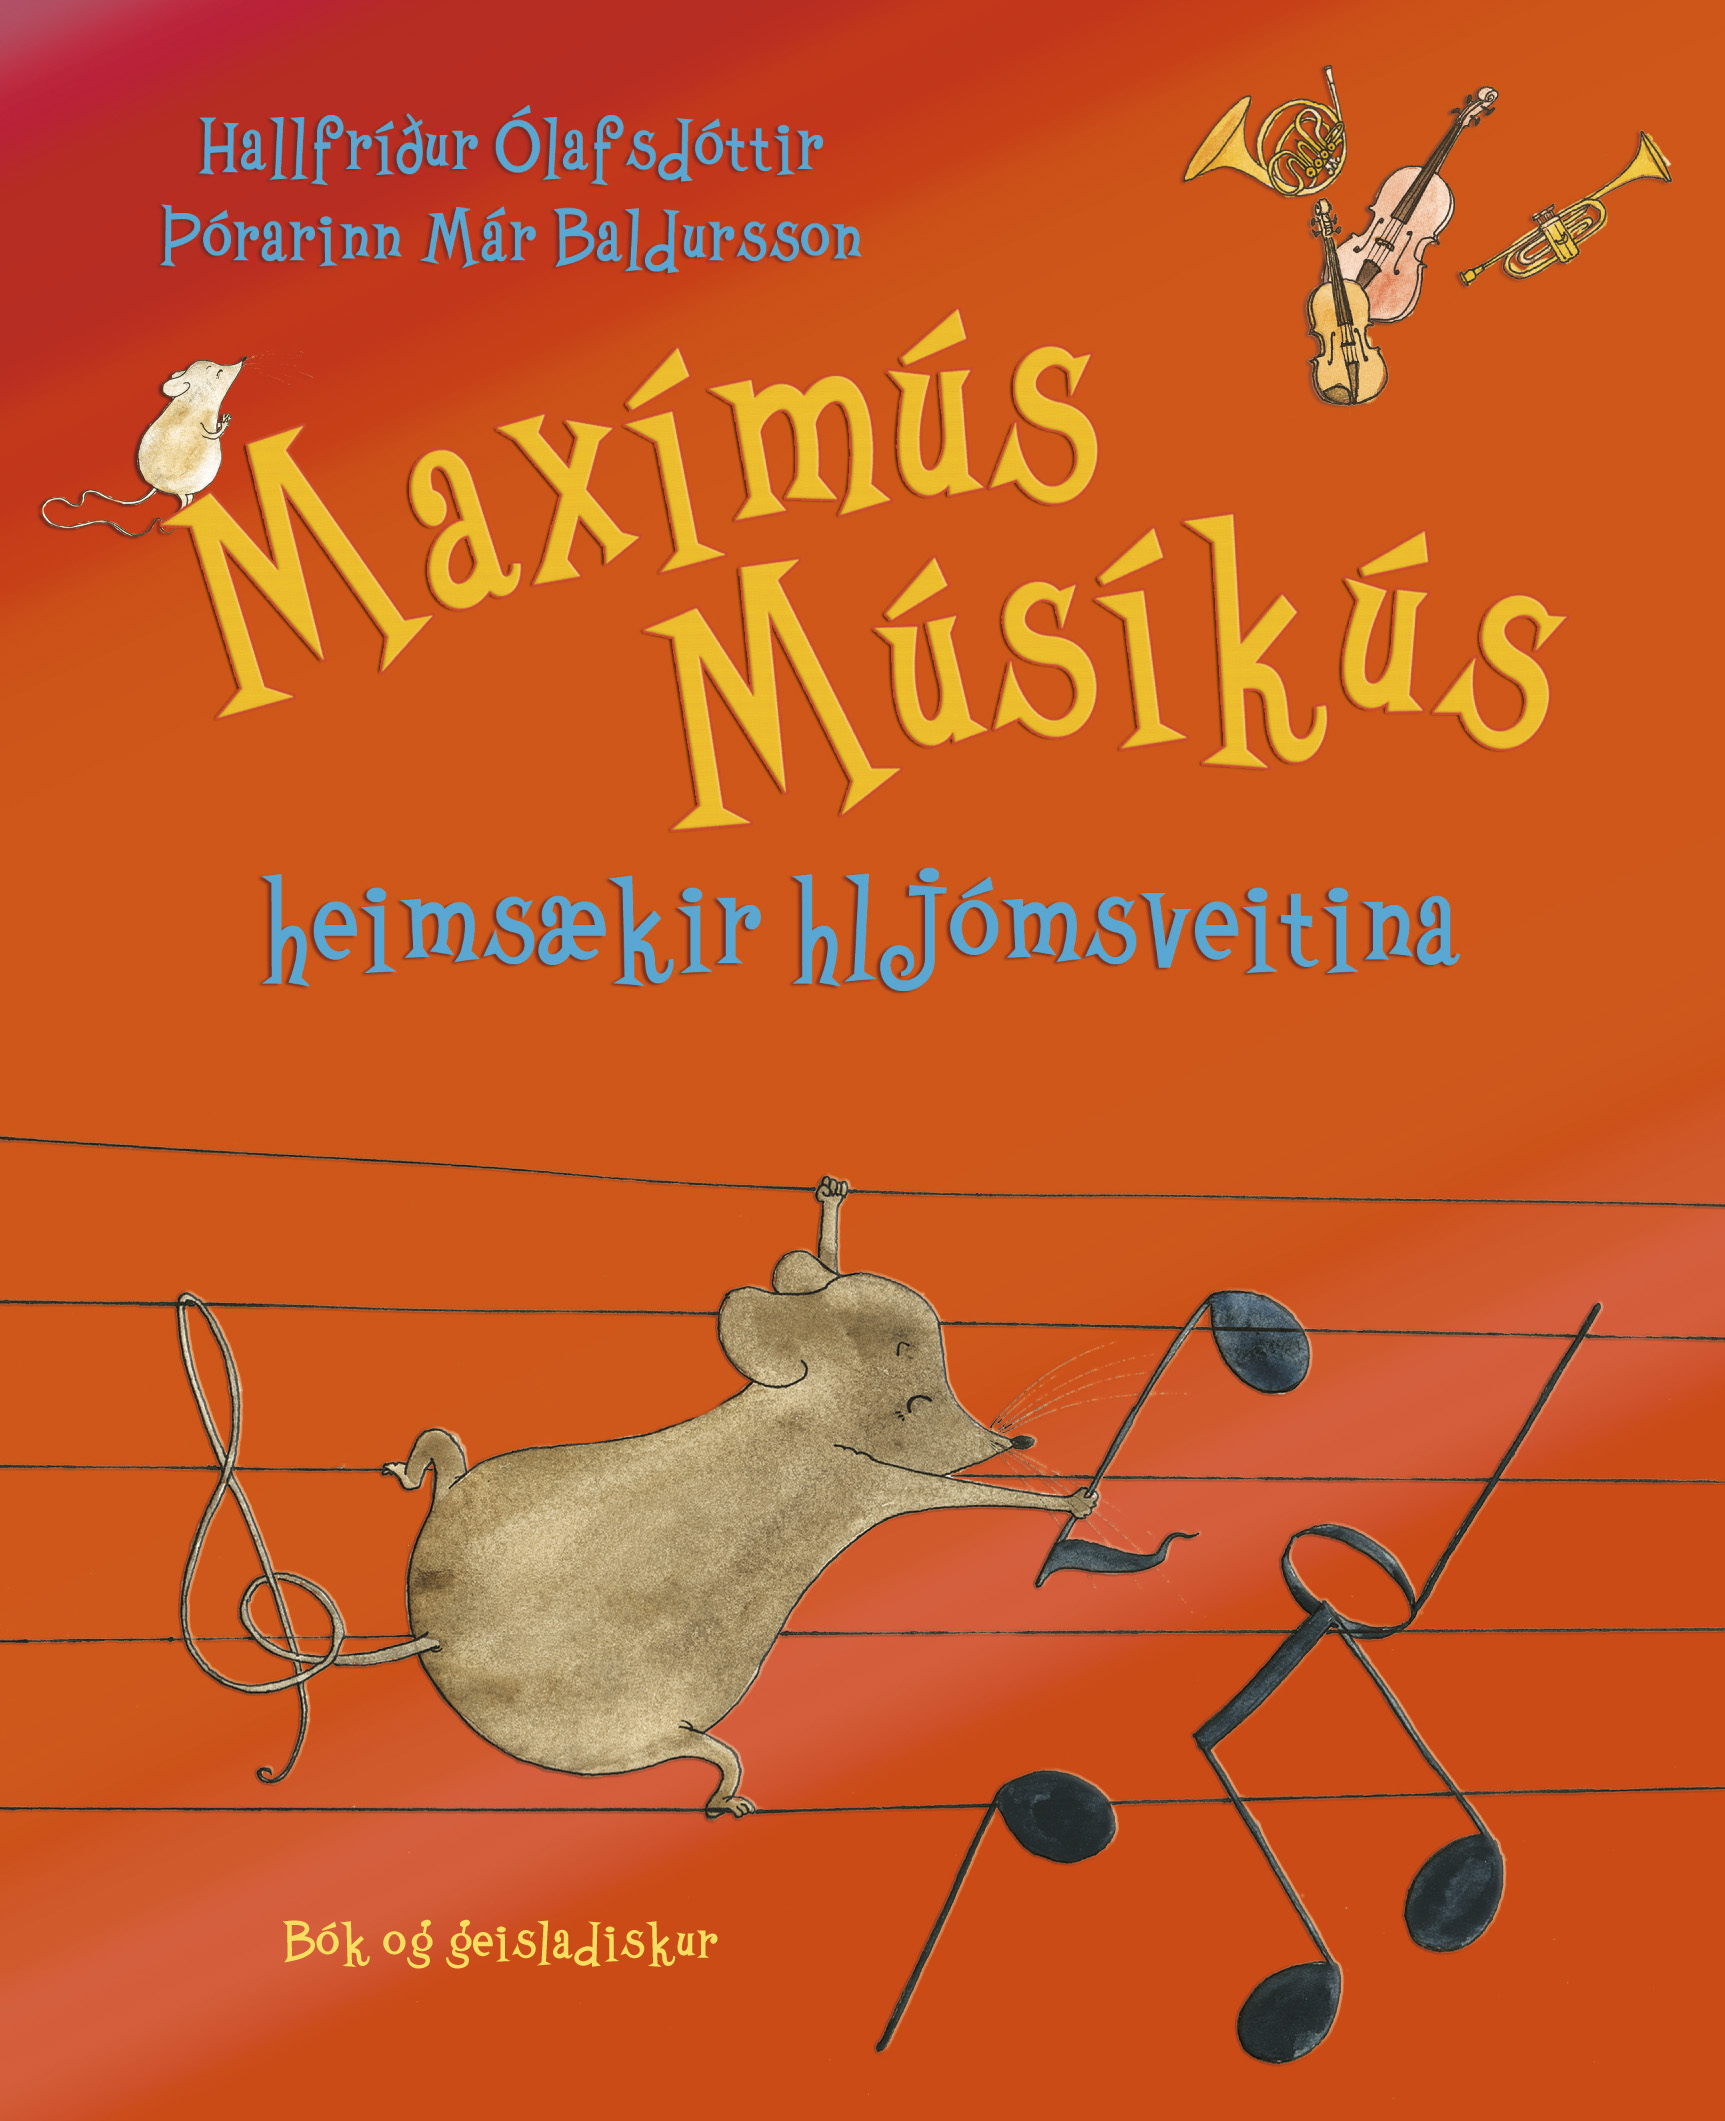 Maximus Musicus Saves the Ballet (2012)